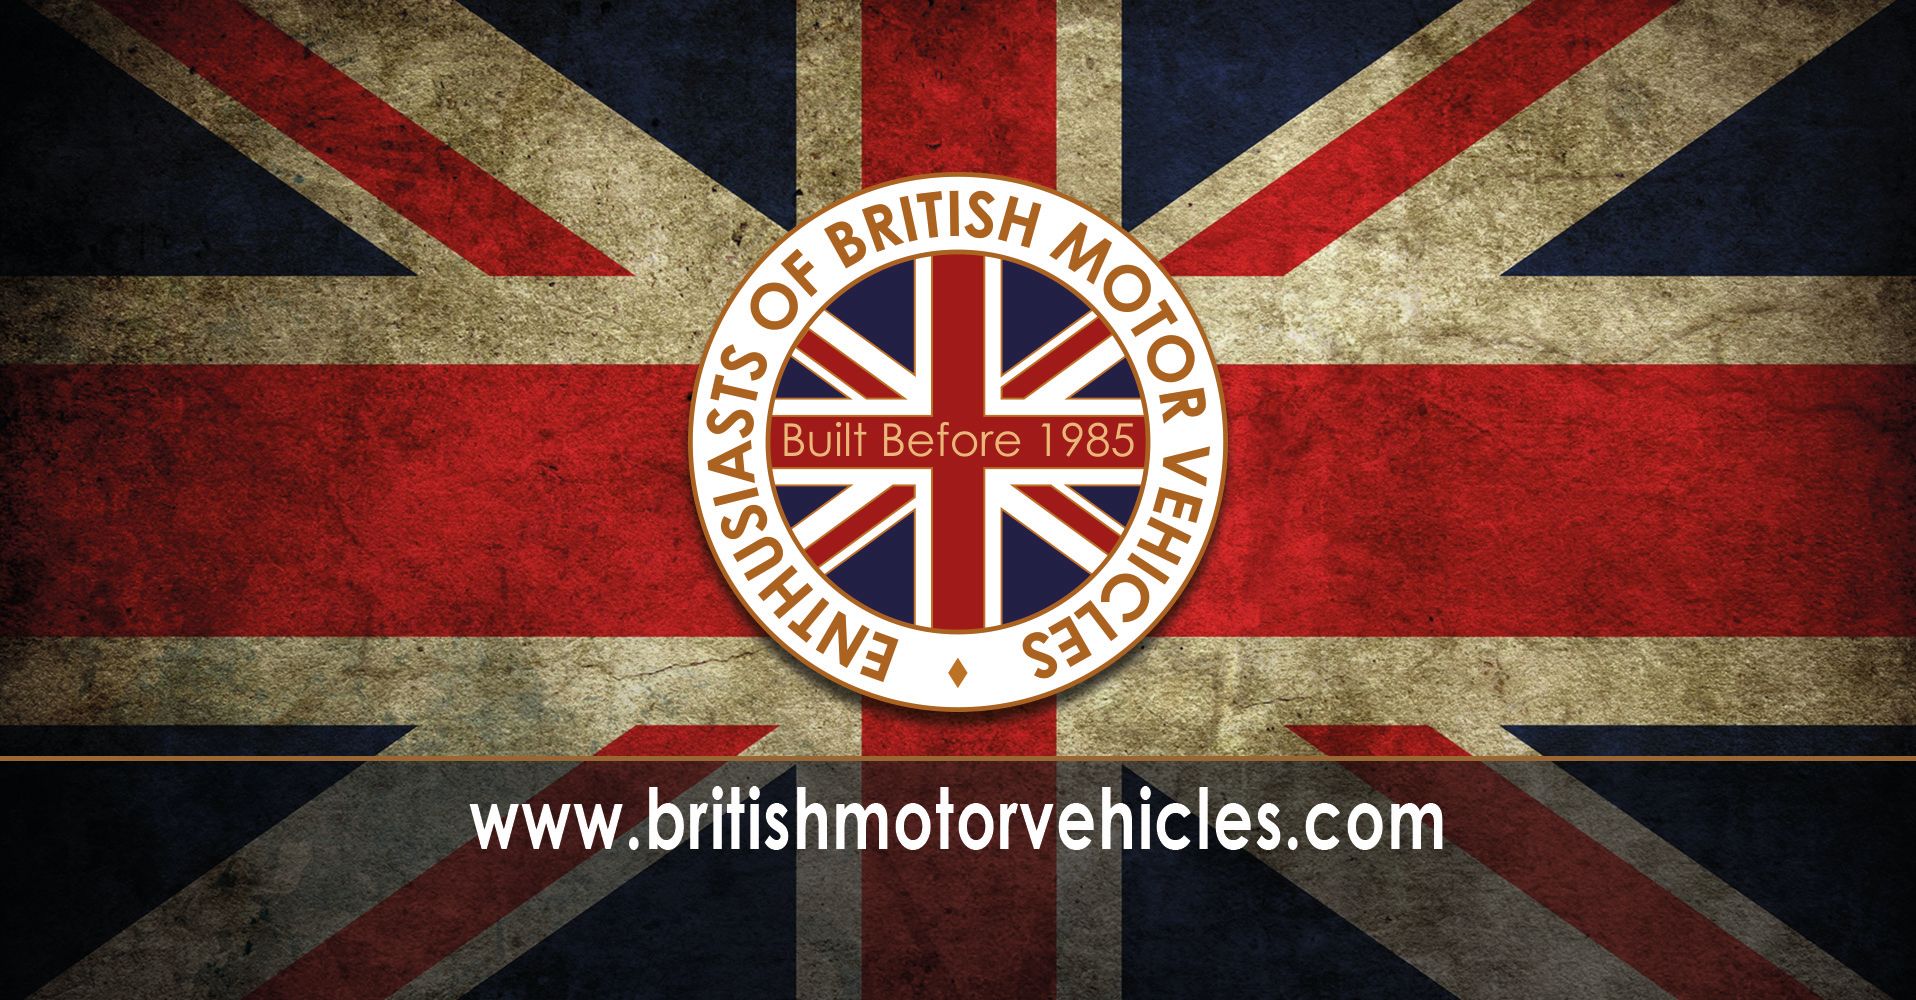 Enthusiasts of British Motor Vehicles